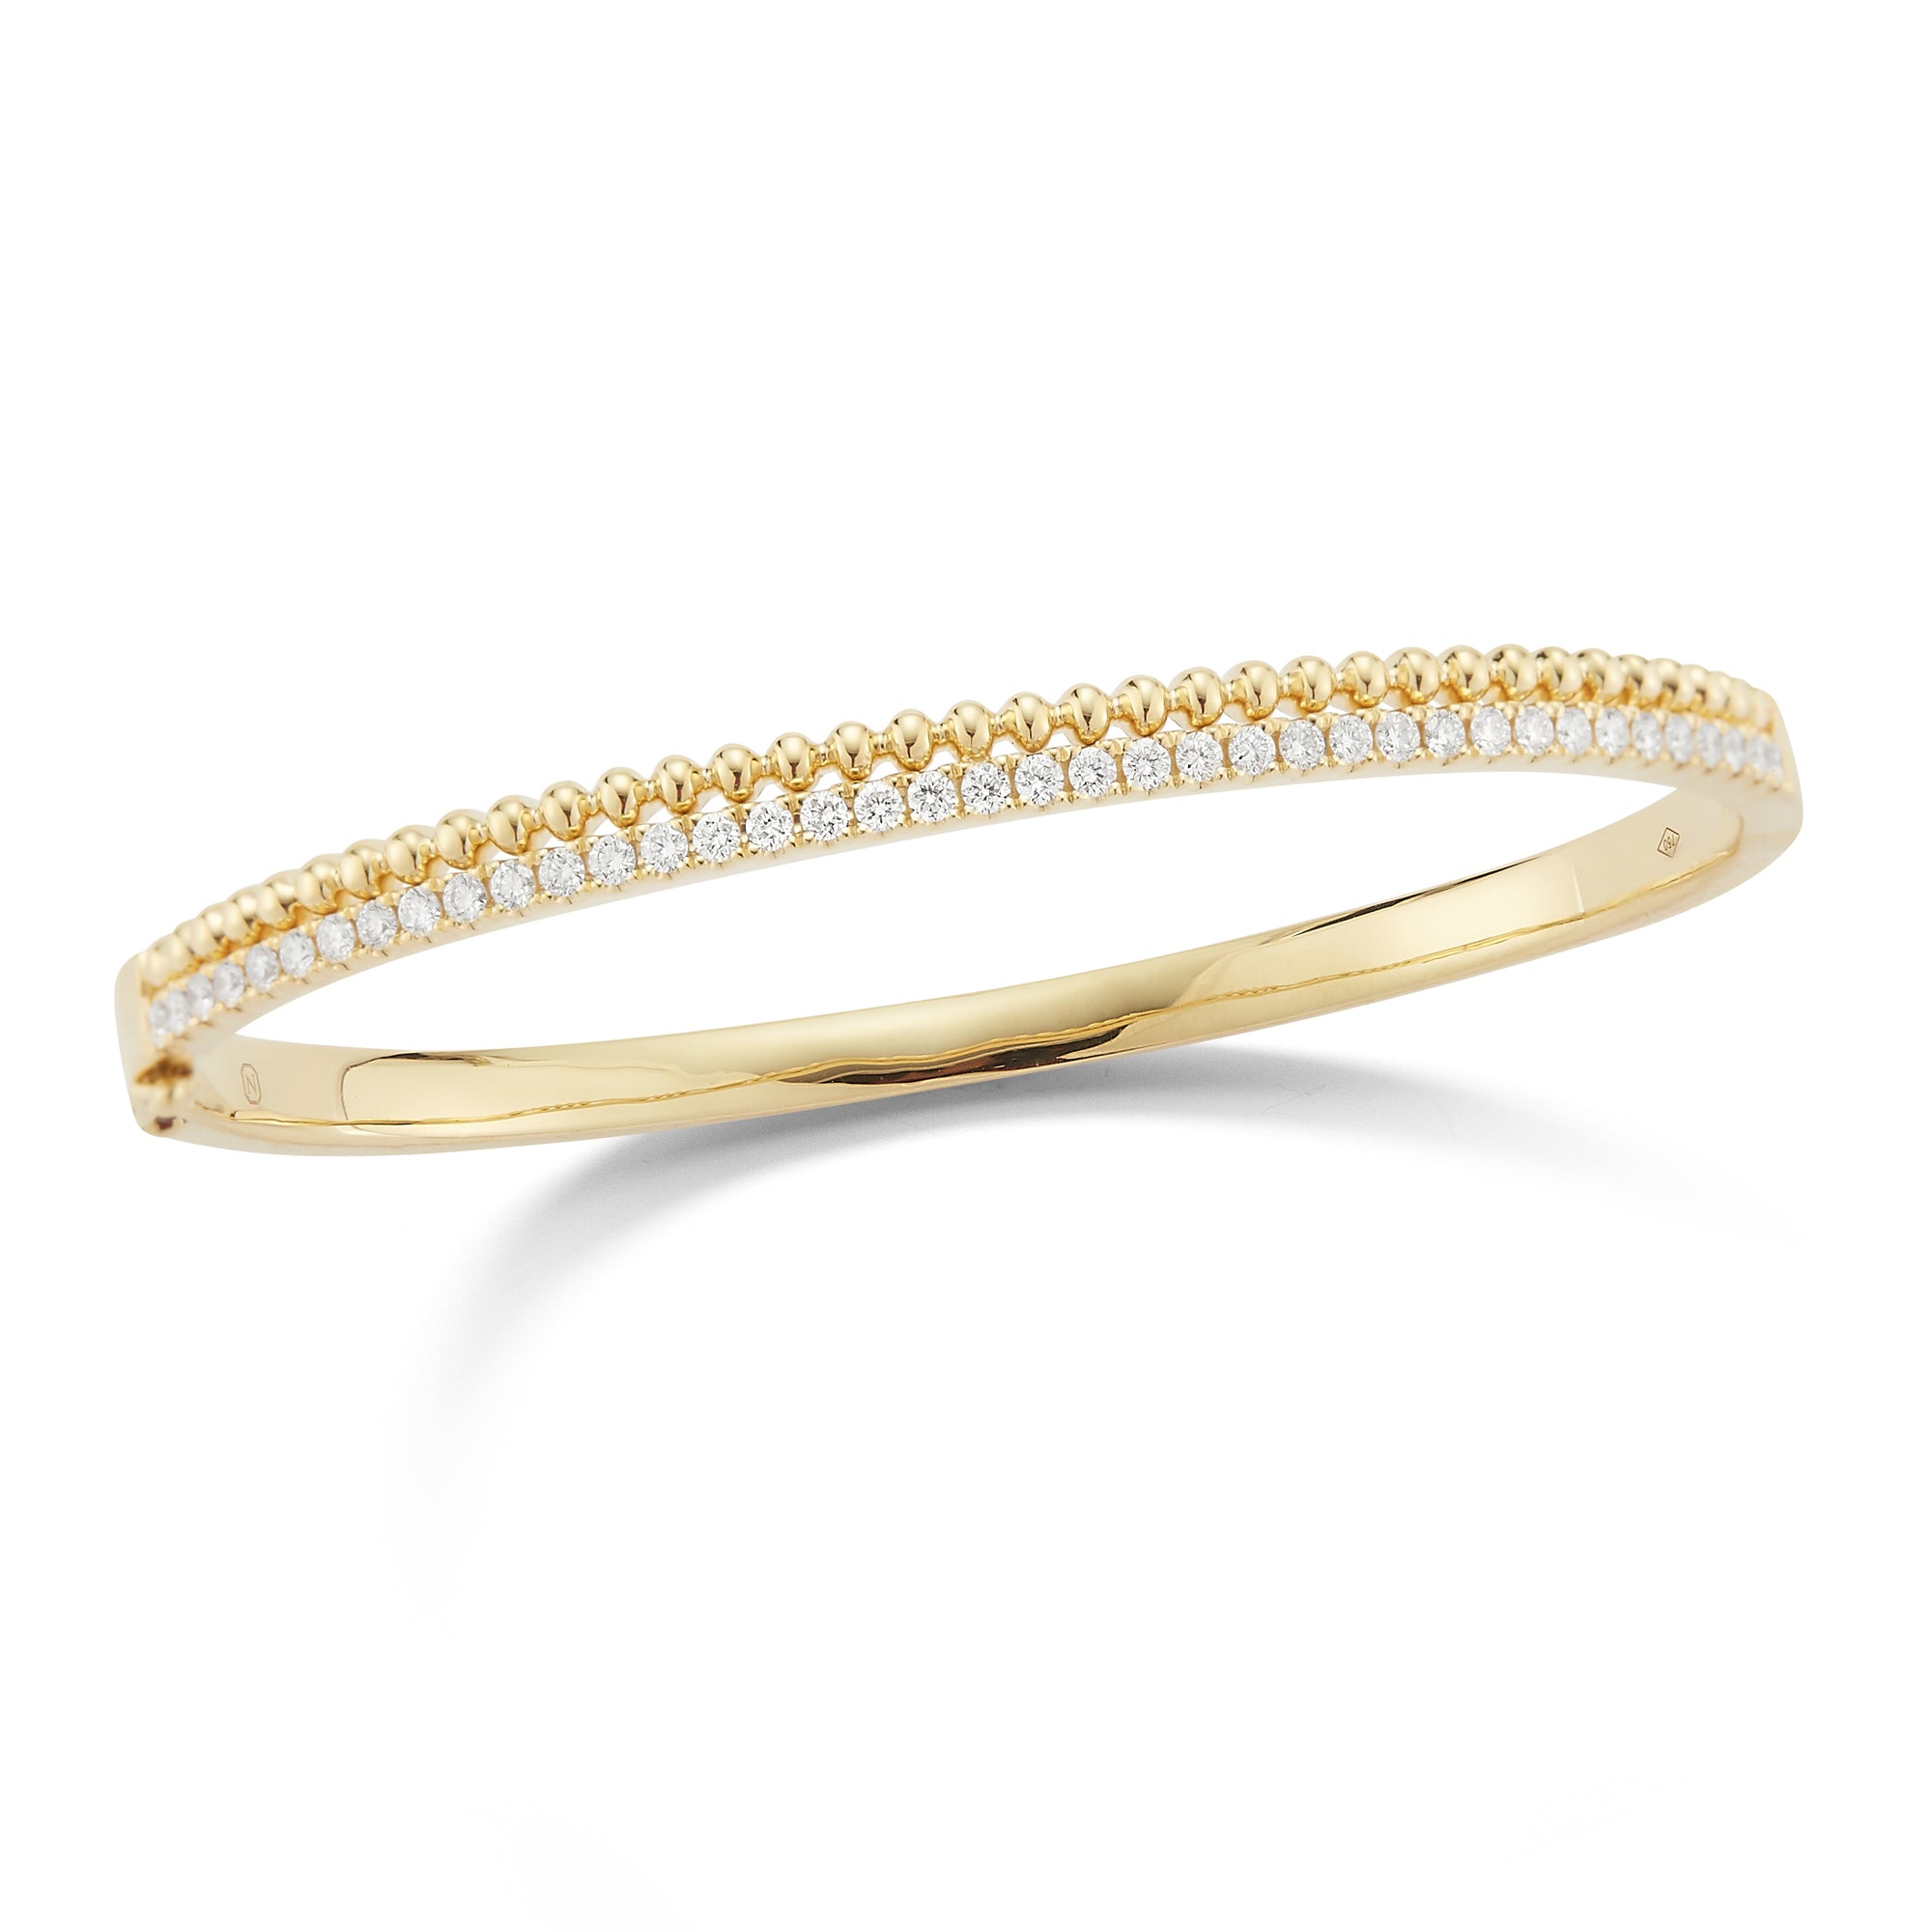 Diamond & Beaded Gold Bangle Bracelet  -18K gold weighing 20.57 grams  -39 round diamonds totaling 0.79 carats